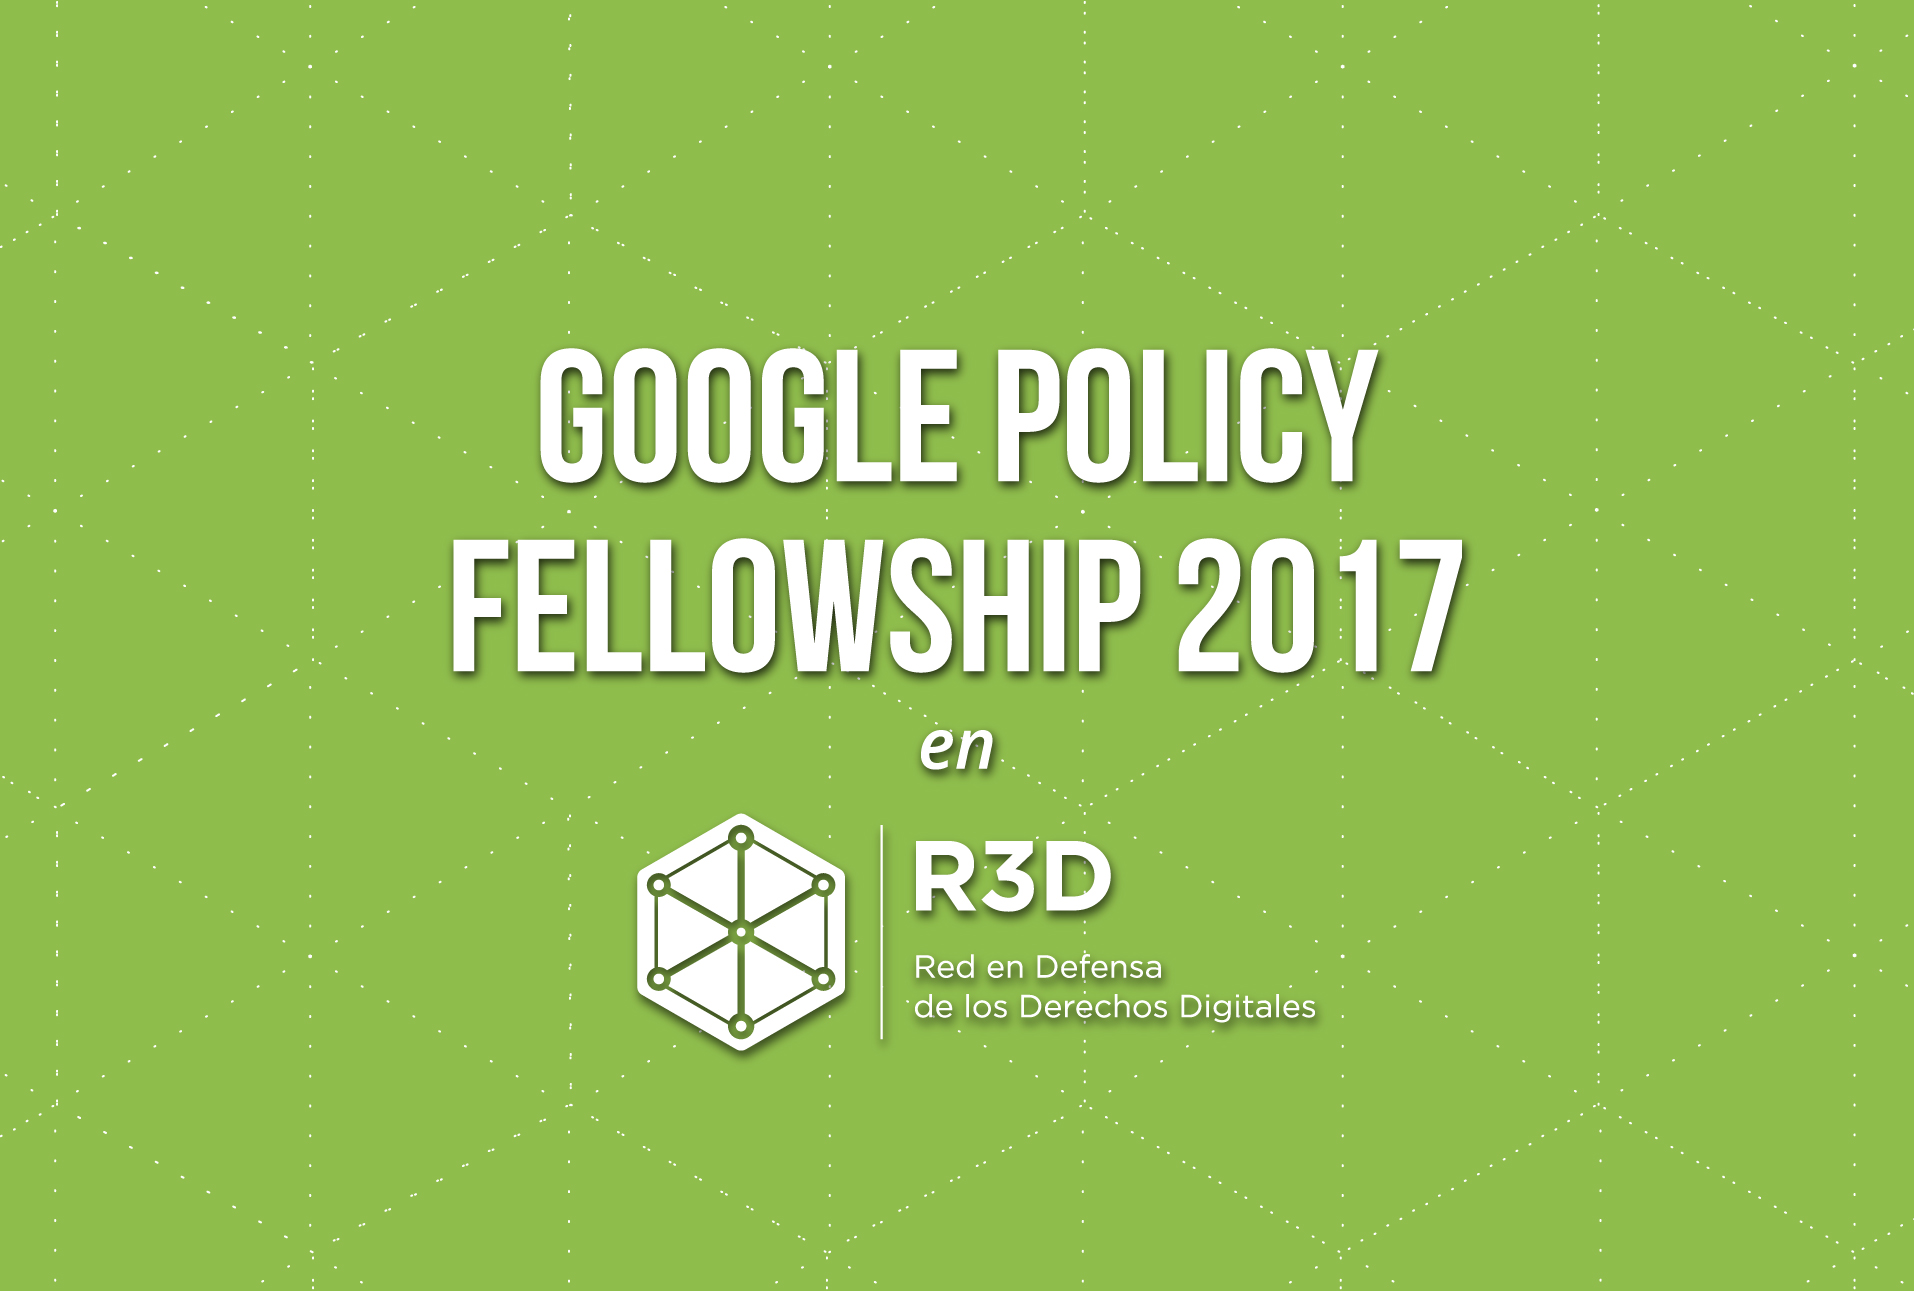 Postula al Google Policy Fellowship 2017 en R3D